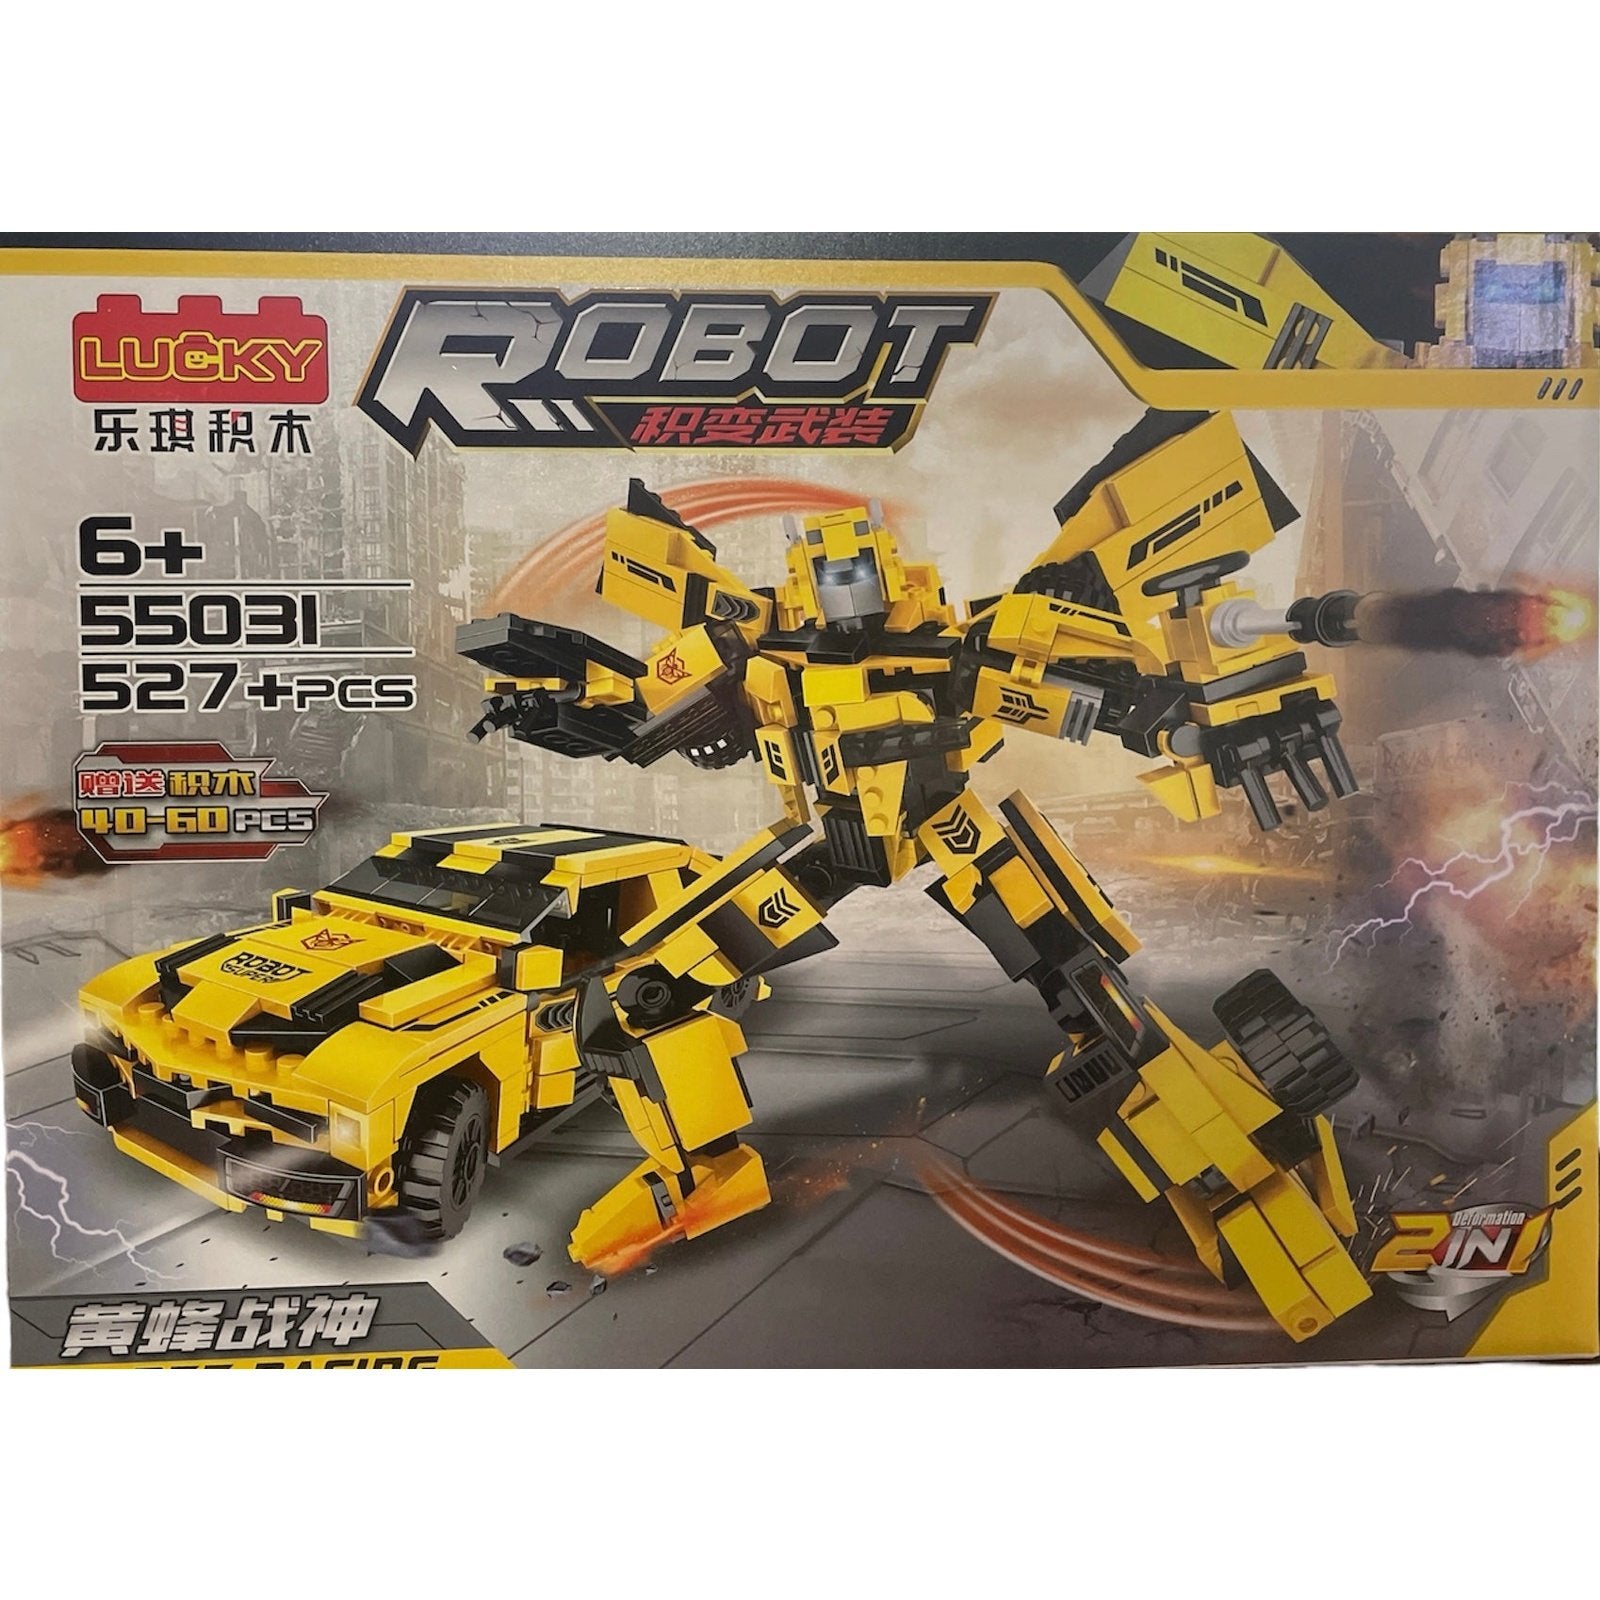 Robot Deformation 55031 Block Set Fun Toy For Kids - kidzbuzzz